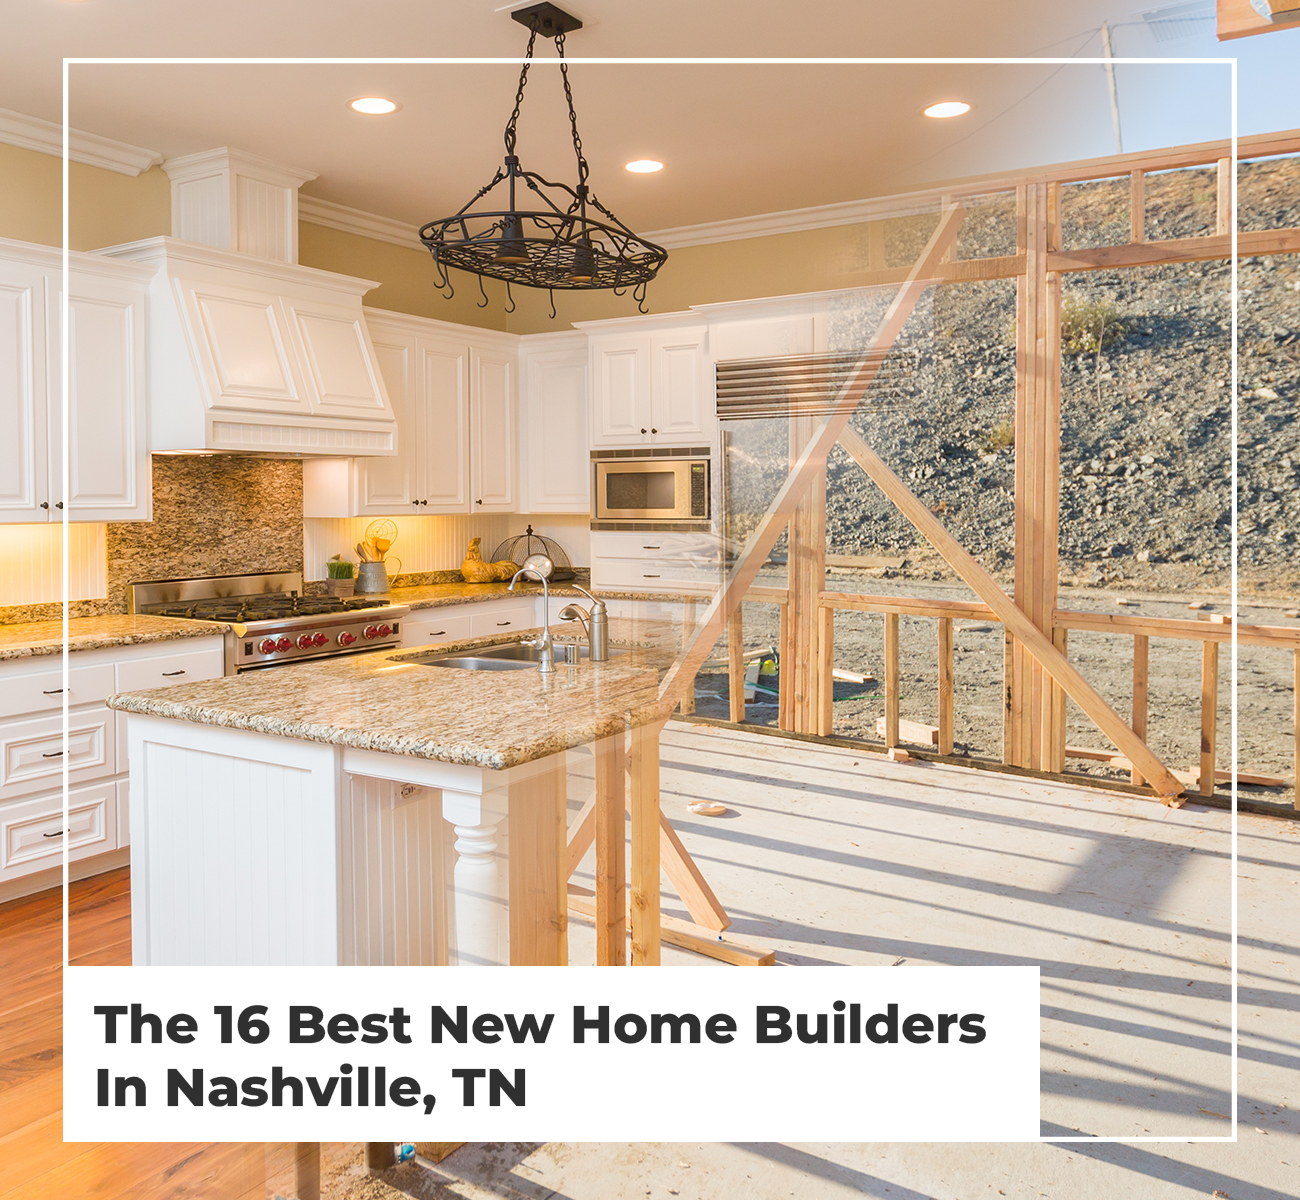 The 16 Best New Home Builders In Nashville, TN